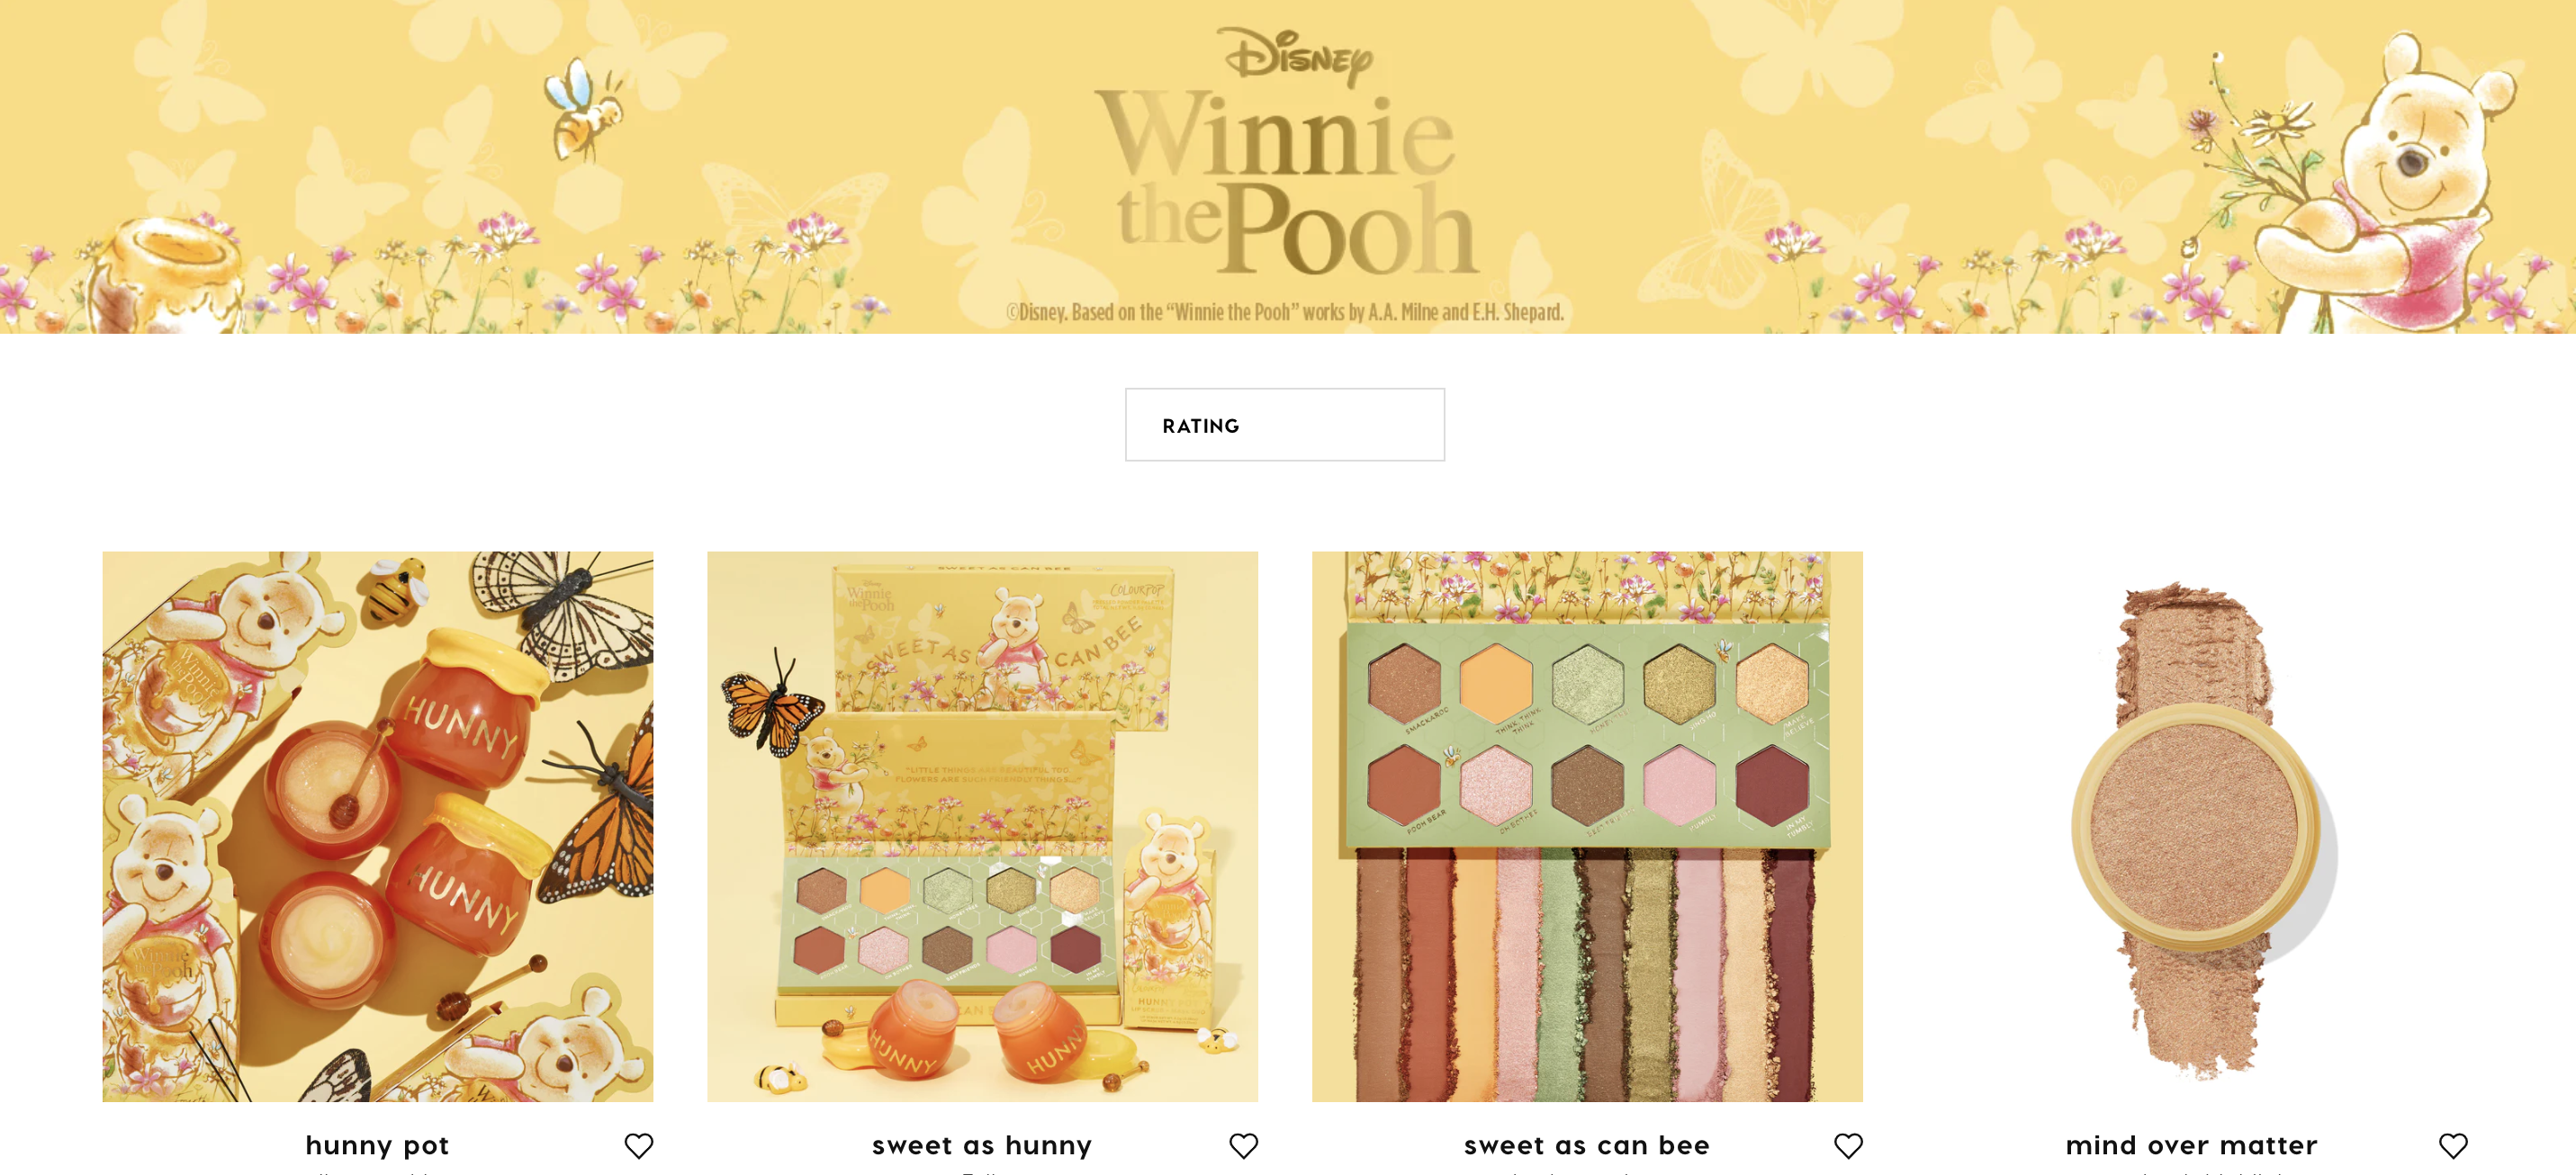 Winnie the Pooh Collab